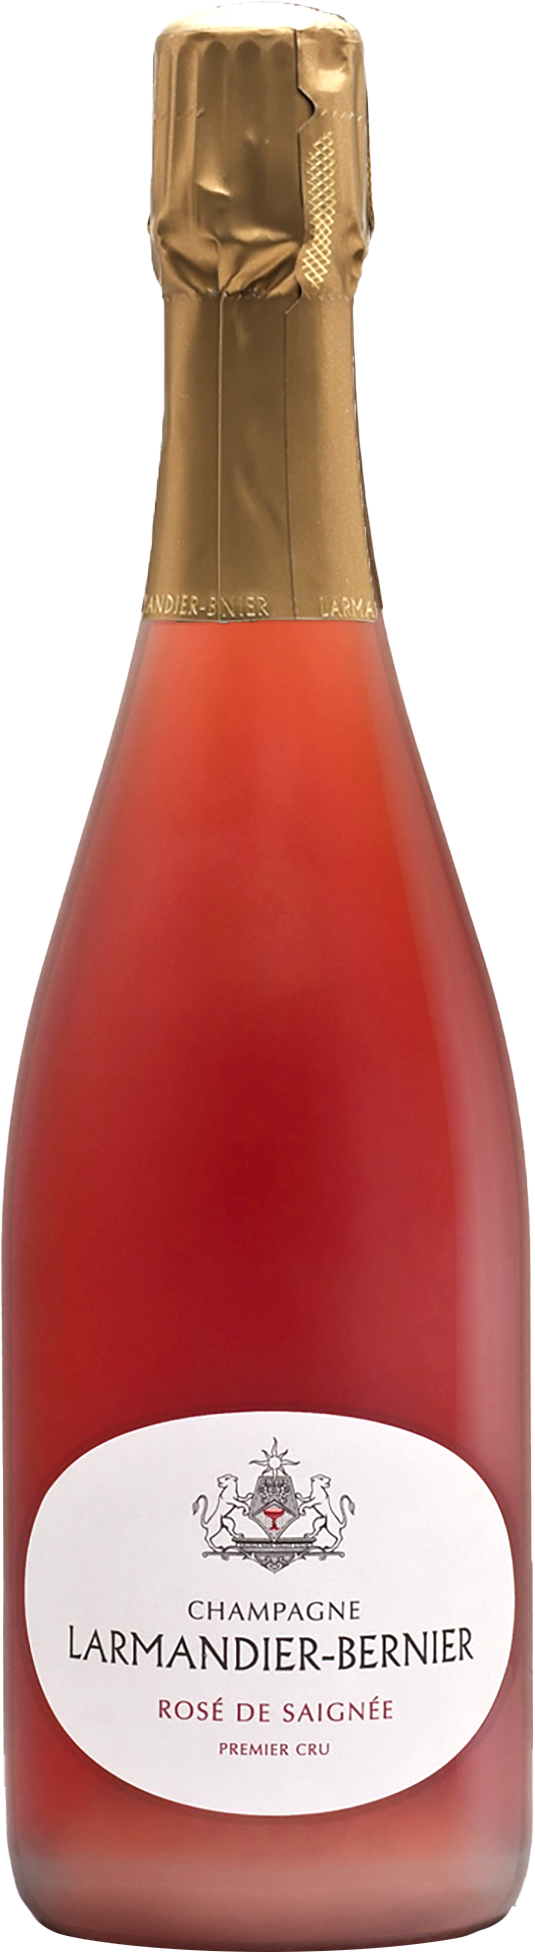 Champagne Larmandier-Bernier 1er Cru Rosé de Saignée NV (Base 18. Disg. Jan 2021)